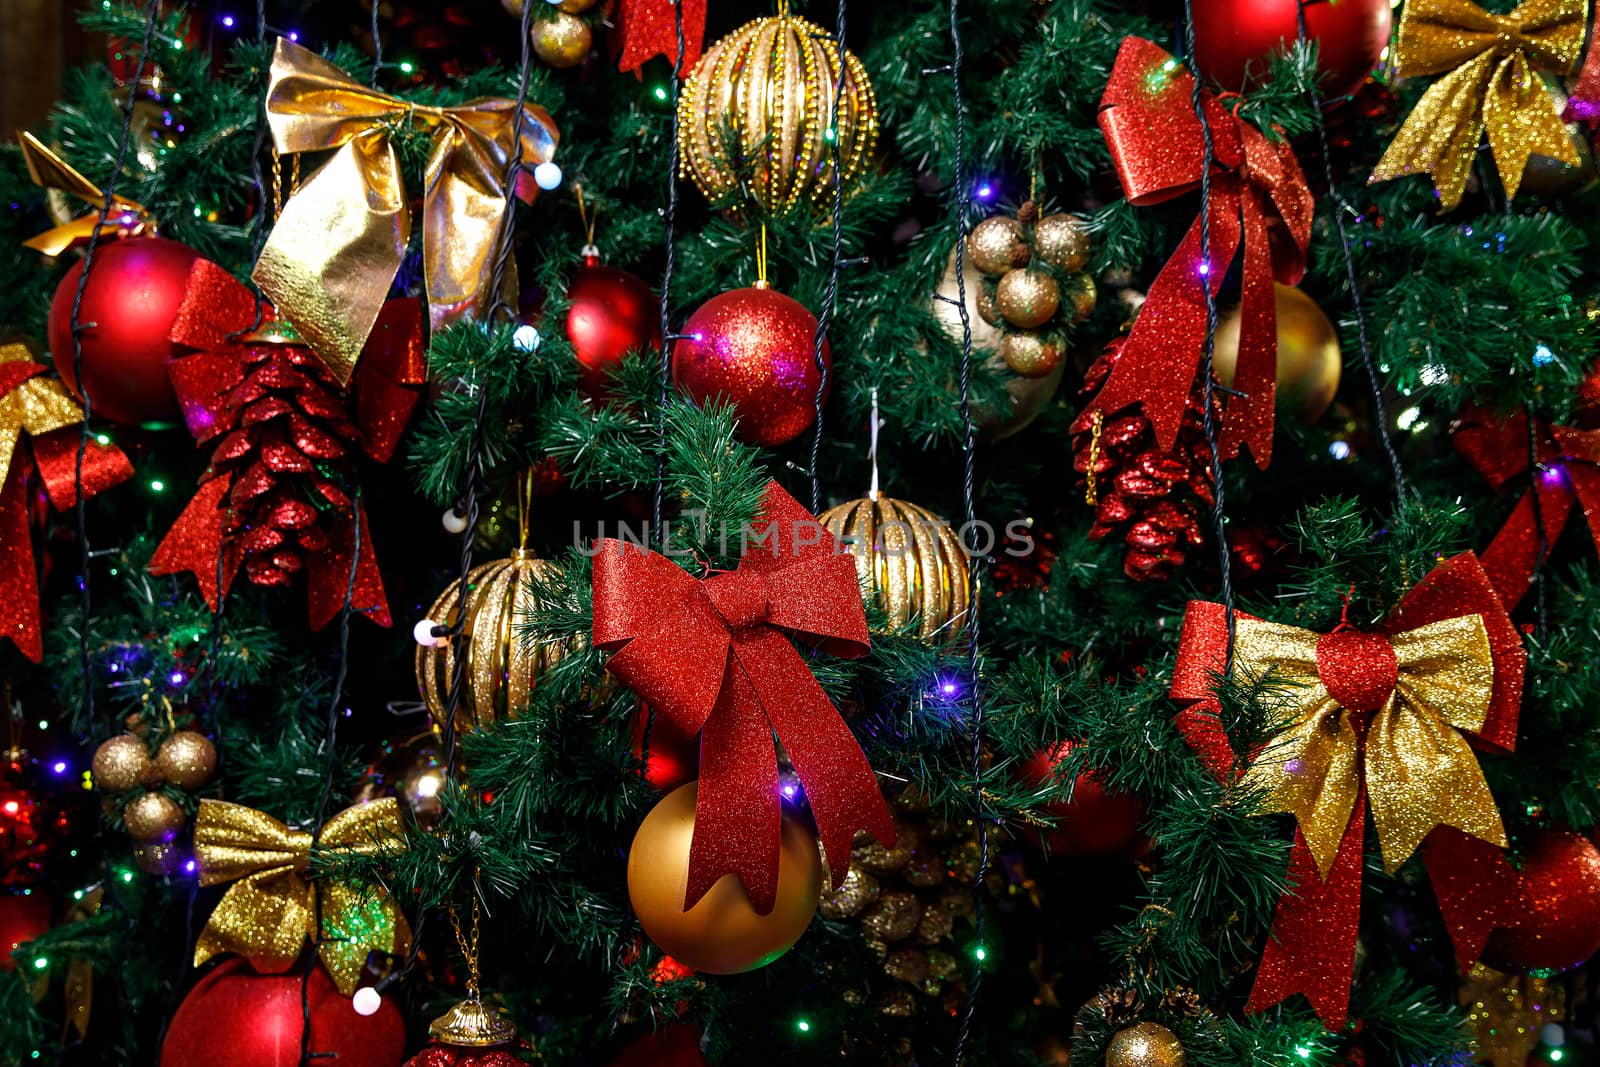 Merry Christmas and Happy Holidays. Christmas tree decor